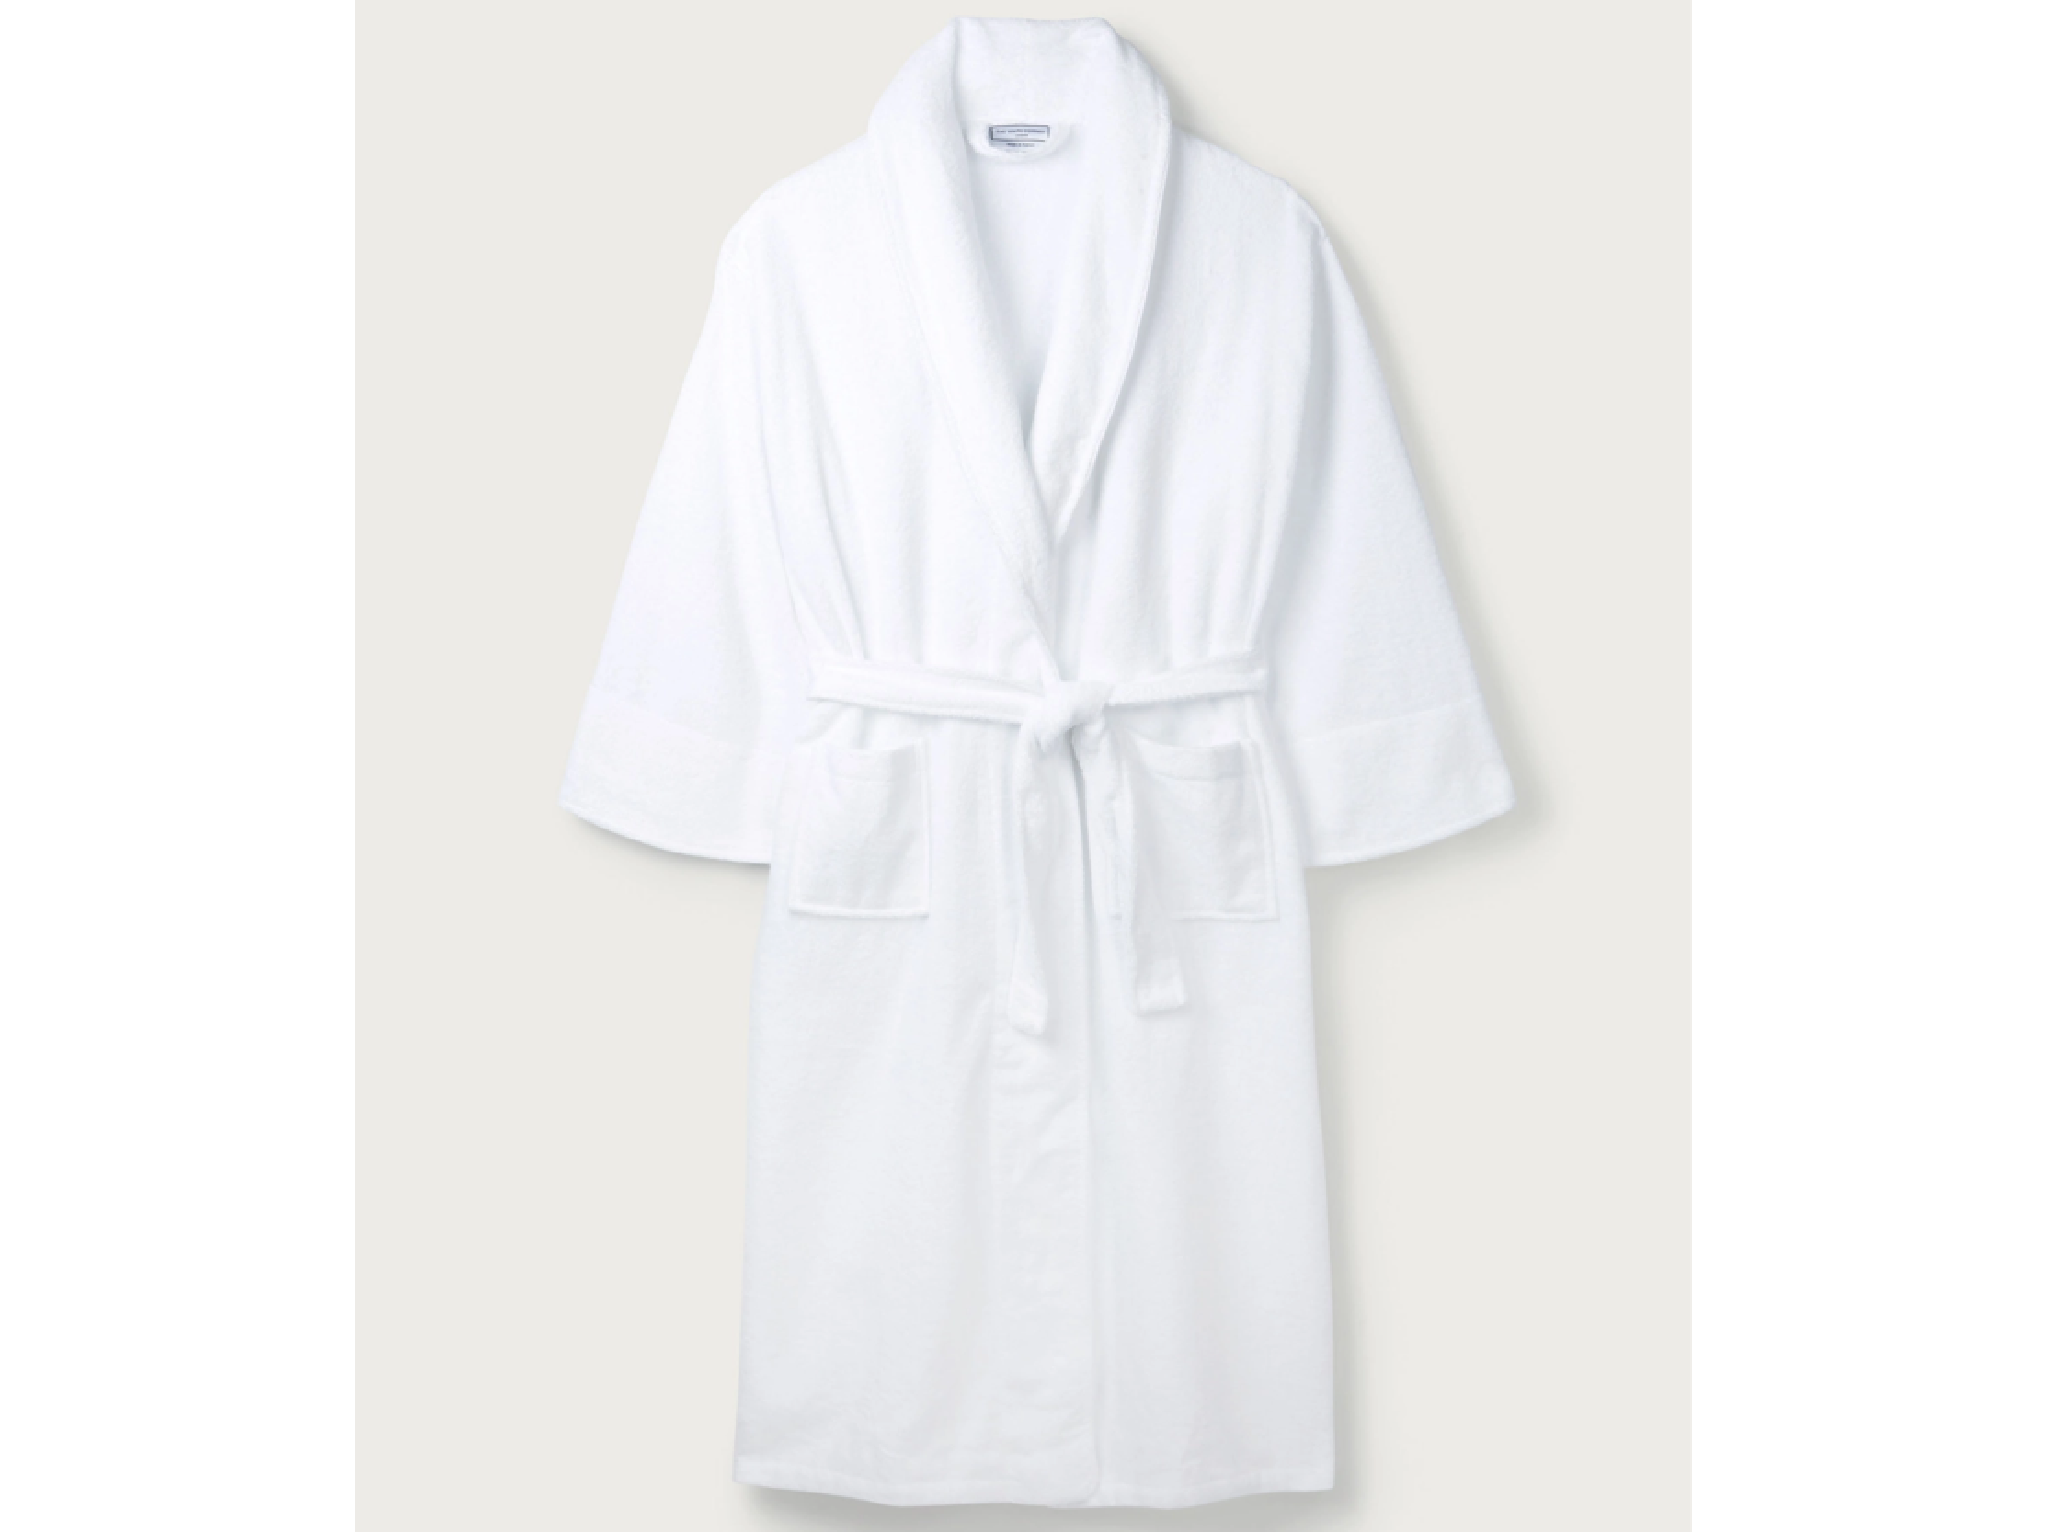 Men's Fleece Dressing Gown in Grey Check | Savile Row Co